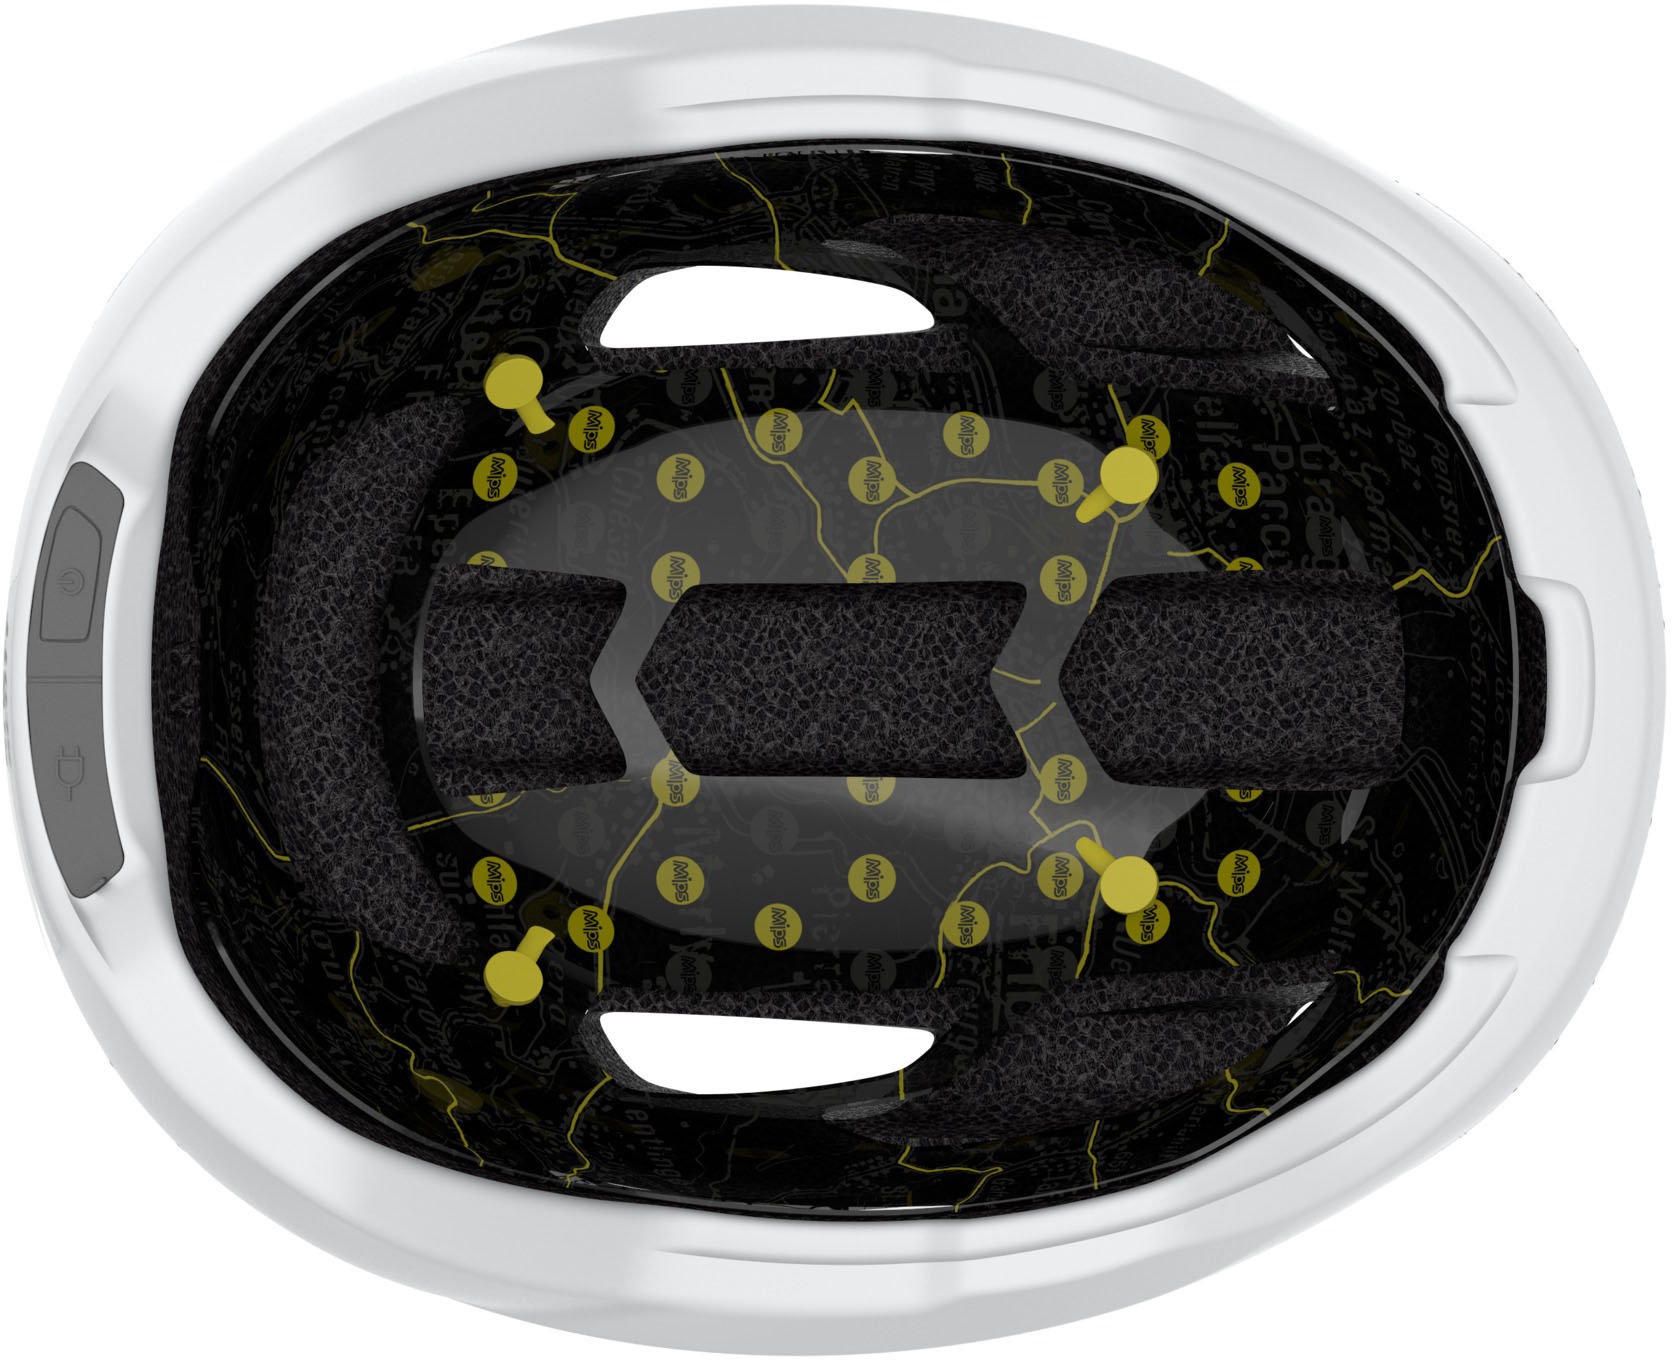 Beklædning - Cykelhjelme - Scott La Mokka Plus Sensor (MIPS) m. LED lys inkl. bremselys Hjelm - Hvid